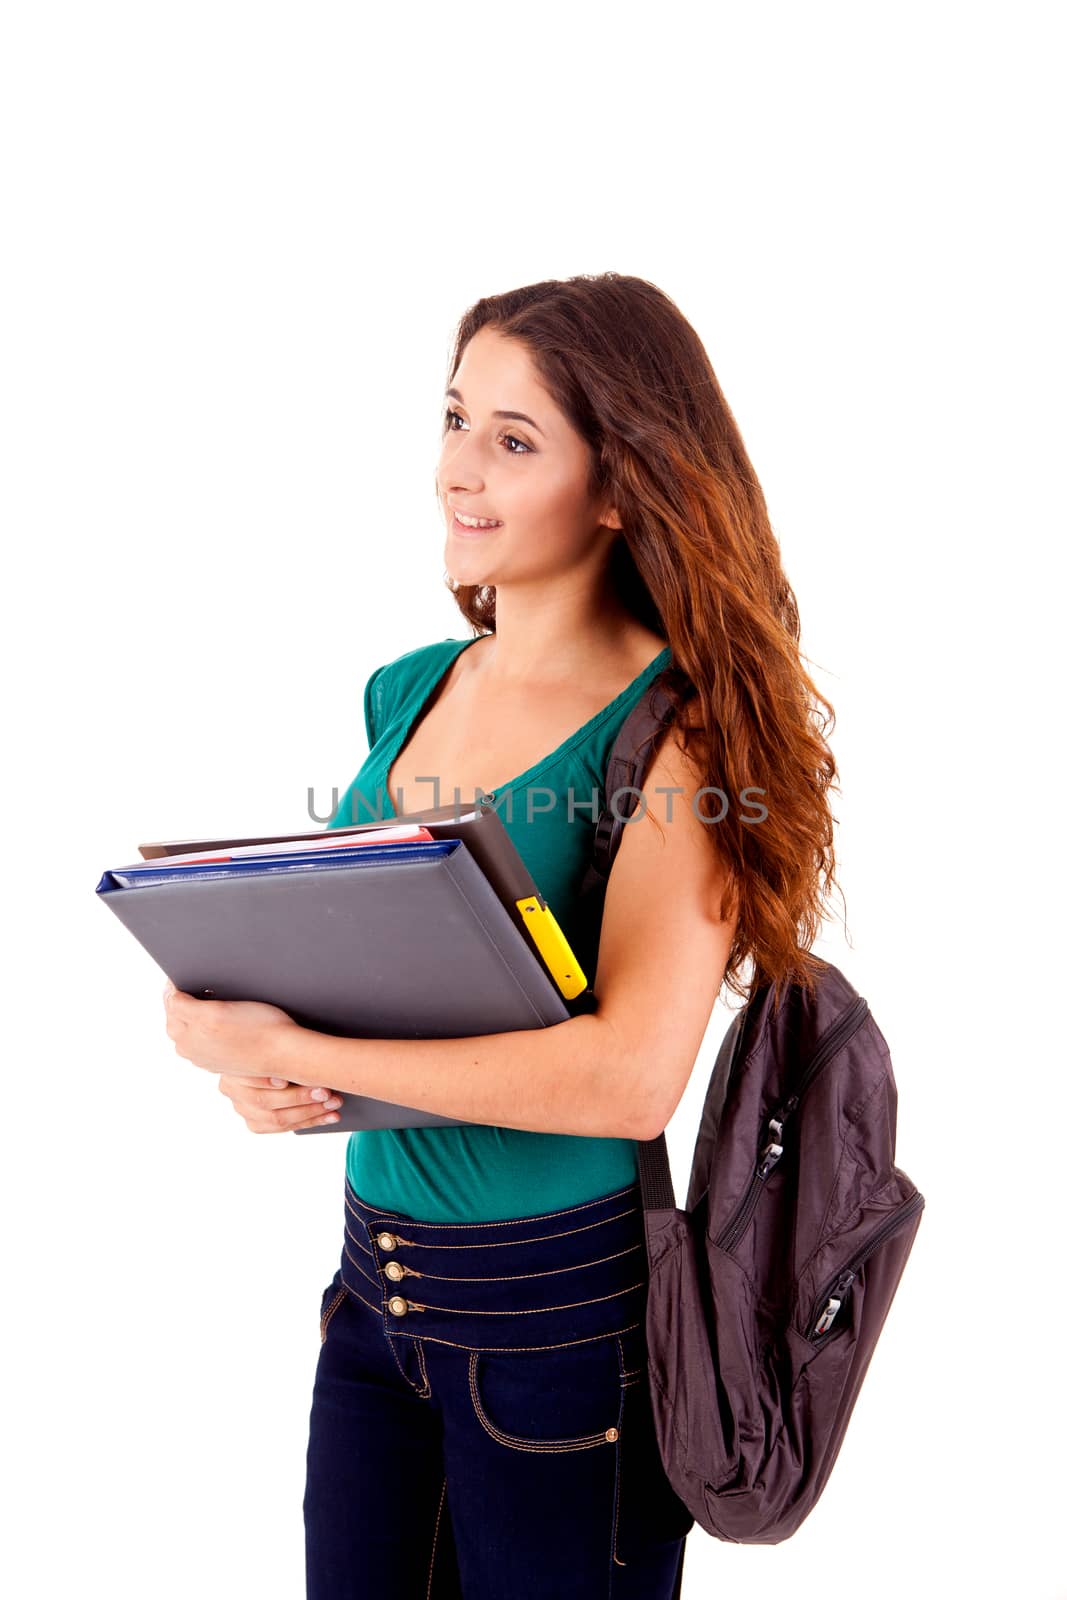 University girl holding books and smiling over white background